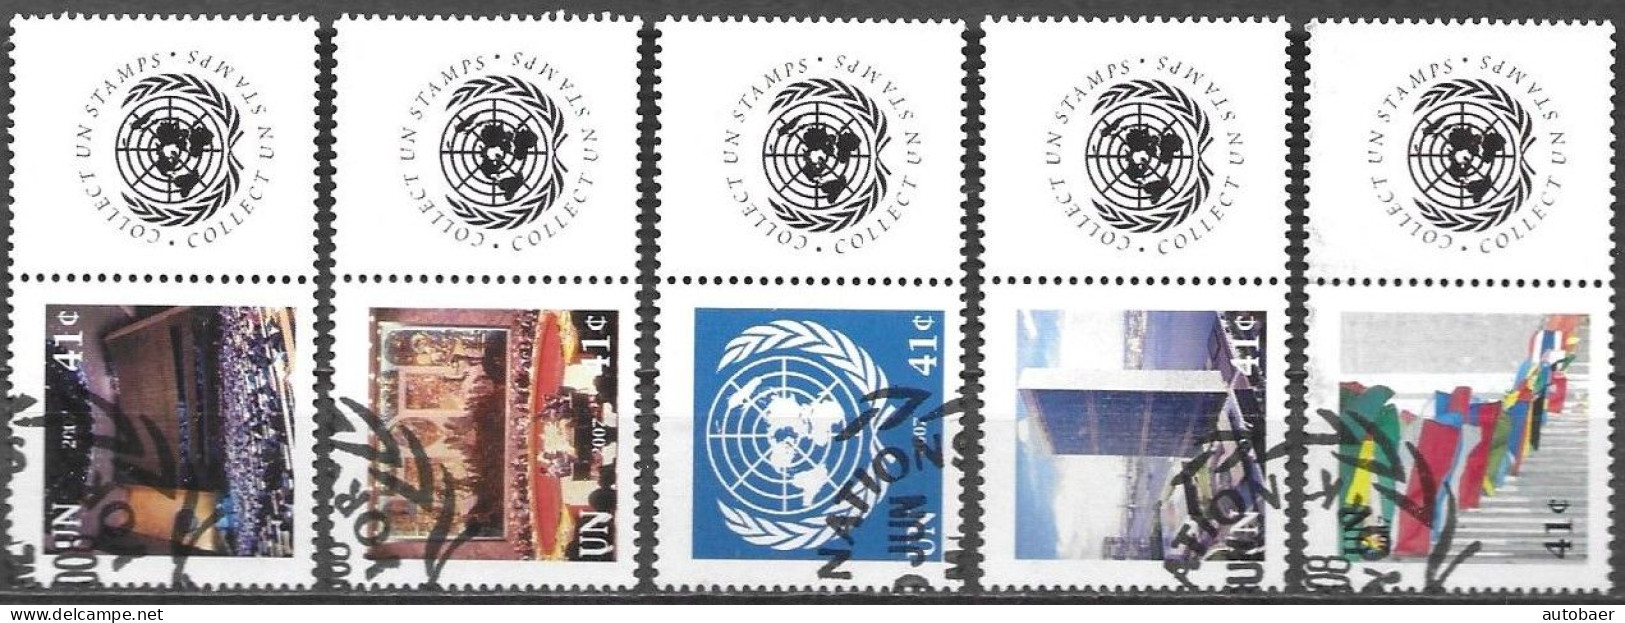 United Nations UNO UN Vereinte Nationen New York 2007 Greetings Mi. No. 1057-61 Label Used Cancelled Oblitéré - Gebraucht